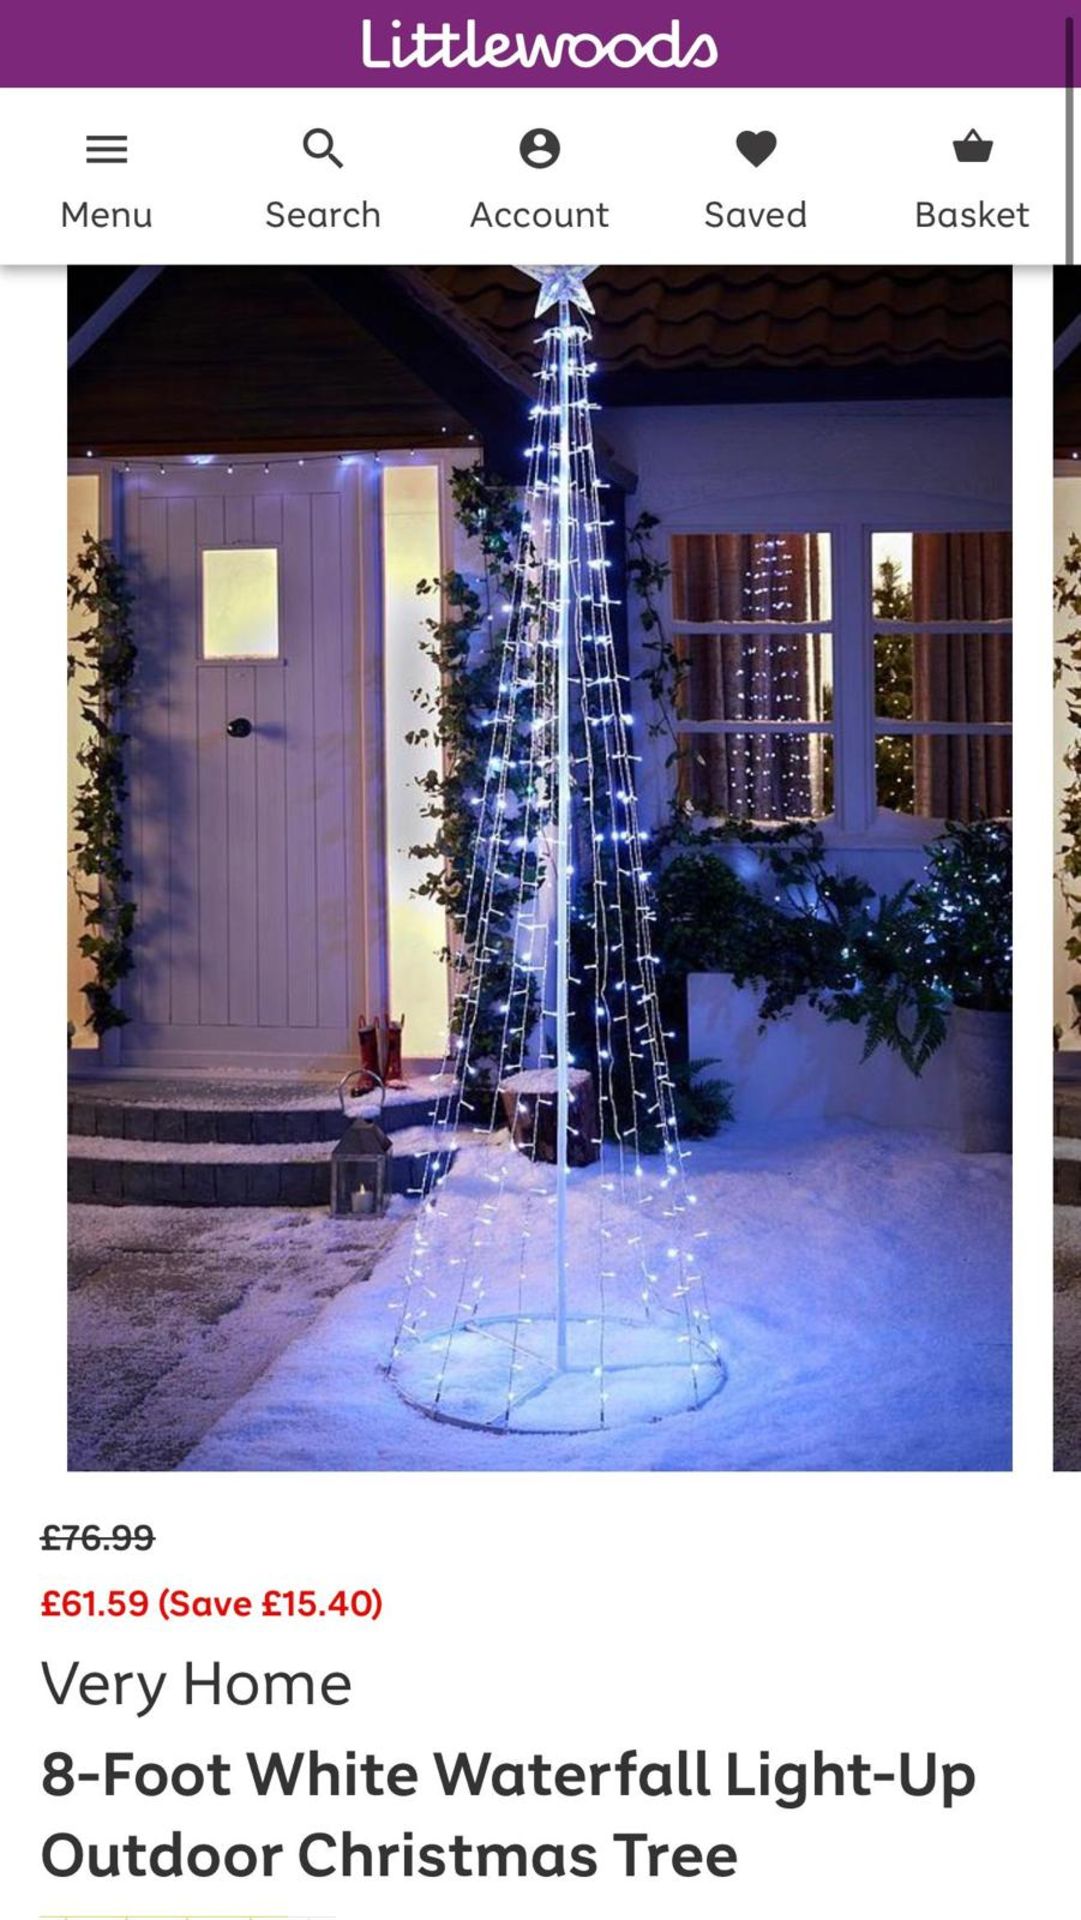 RAW RETURN - 8-Foot White Waterfall Light-Up Outdoor Christmas Tree